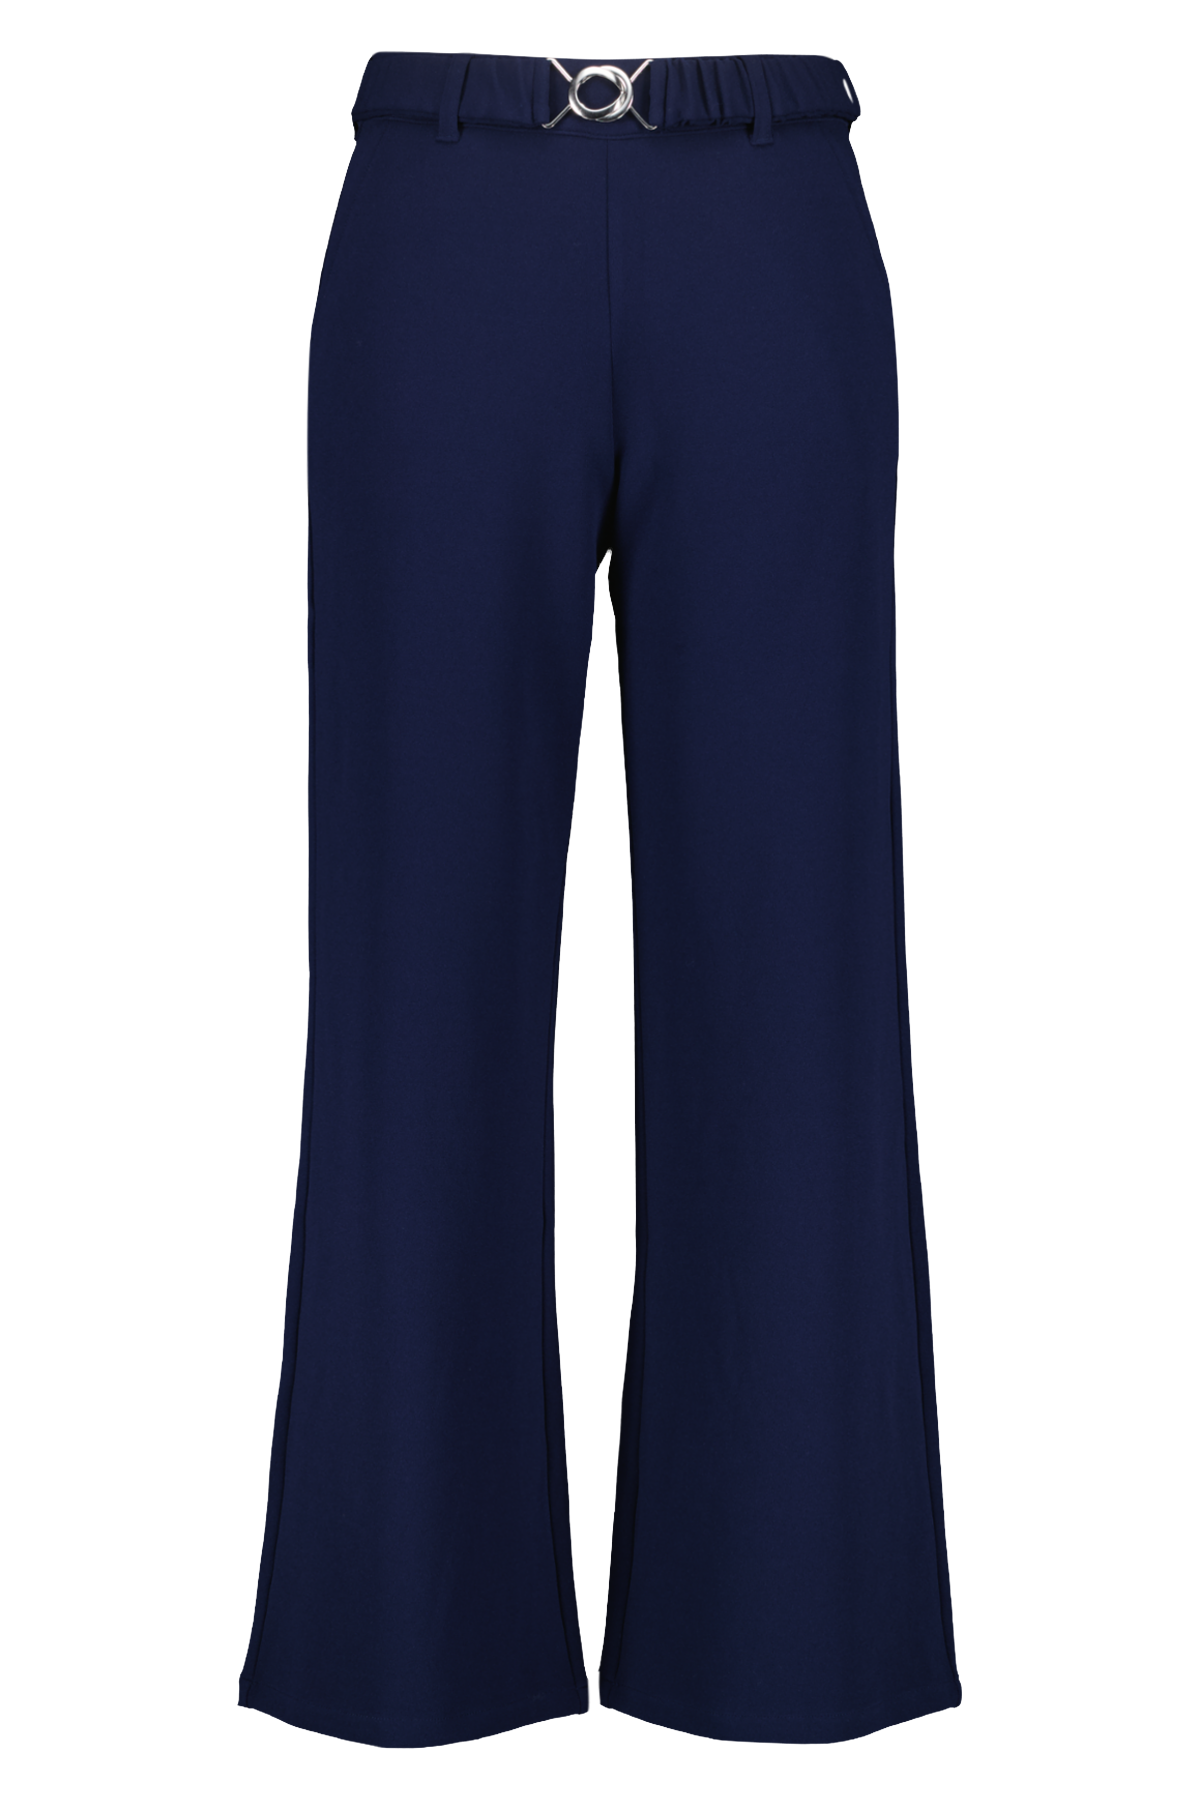 Damen Hose mit dazu passendem | MS Gürtel Navyblau Mode